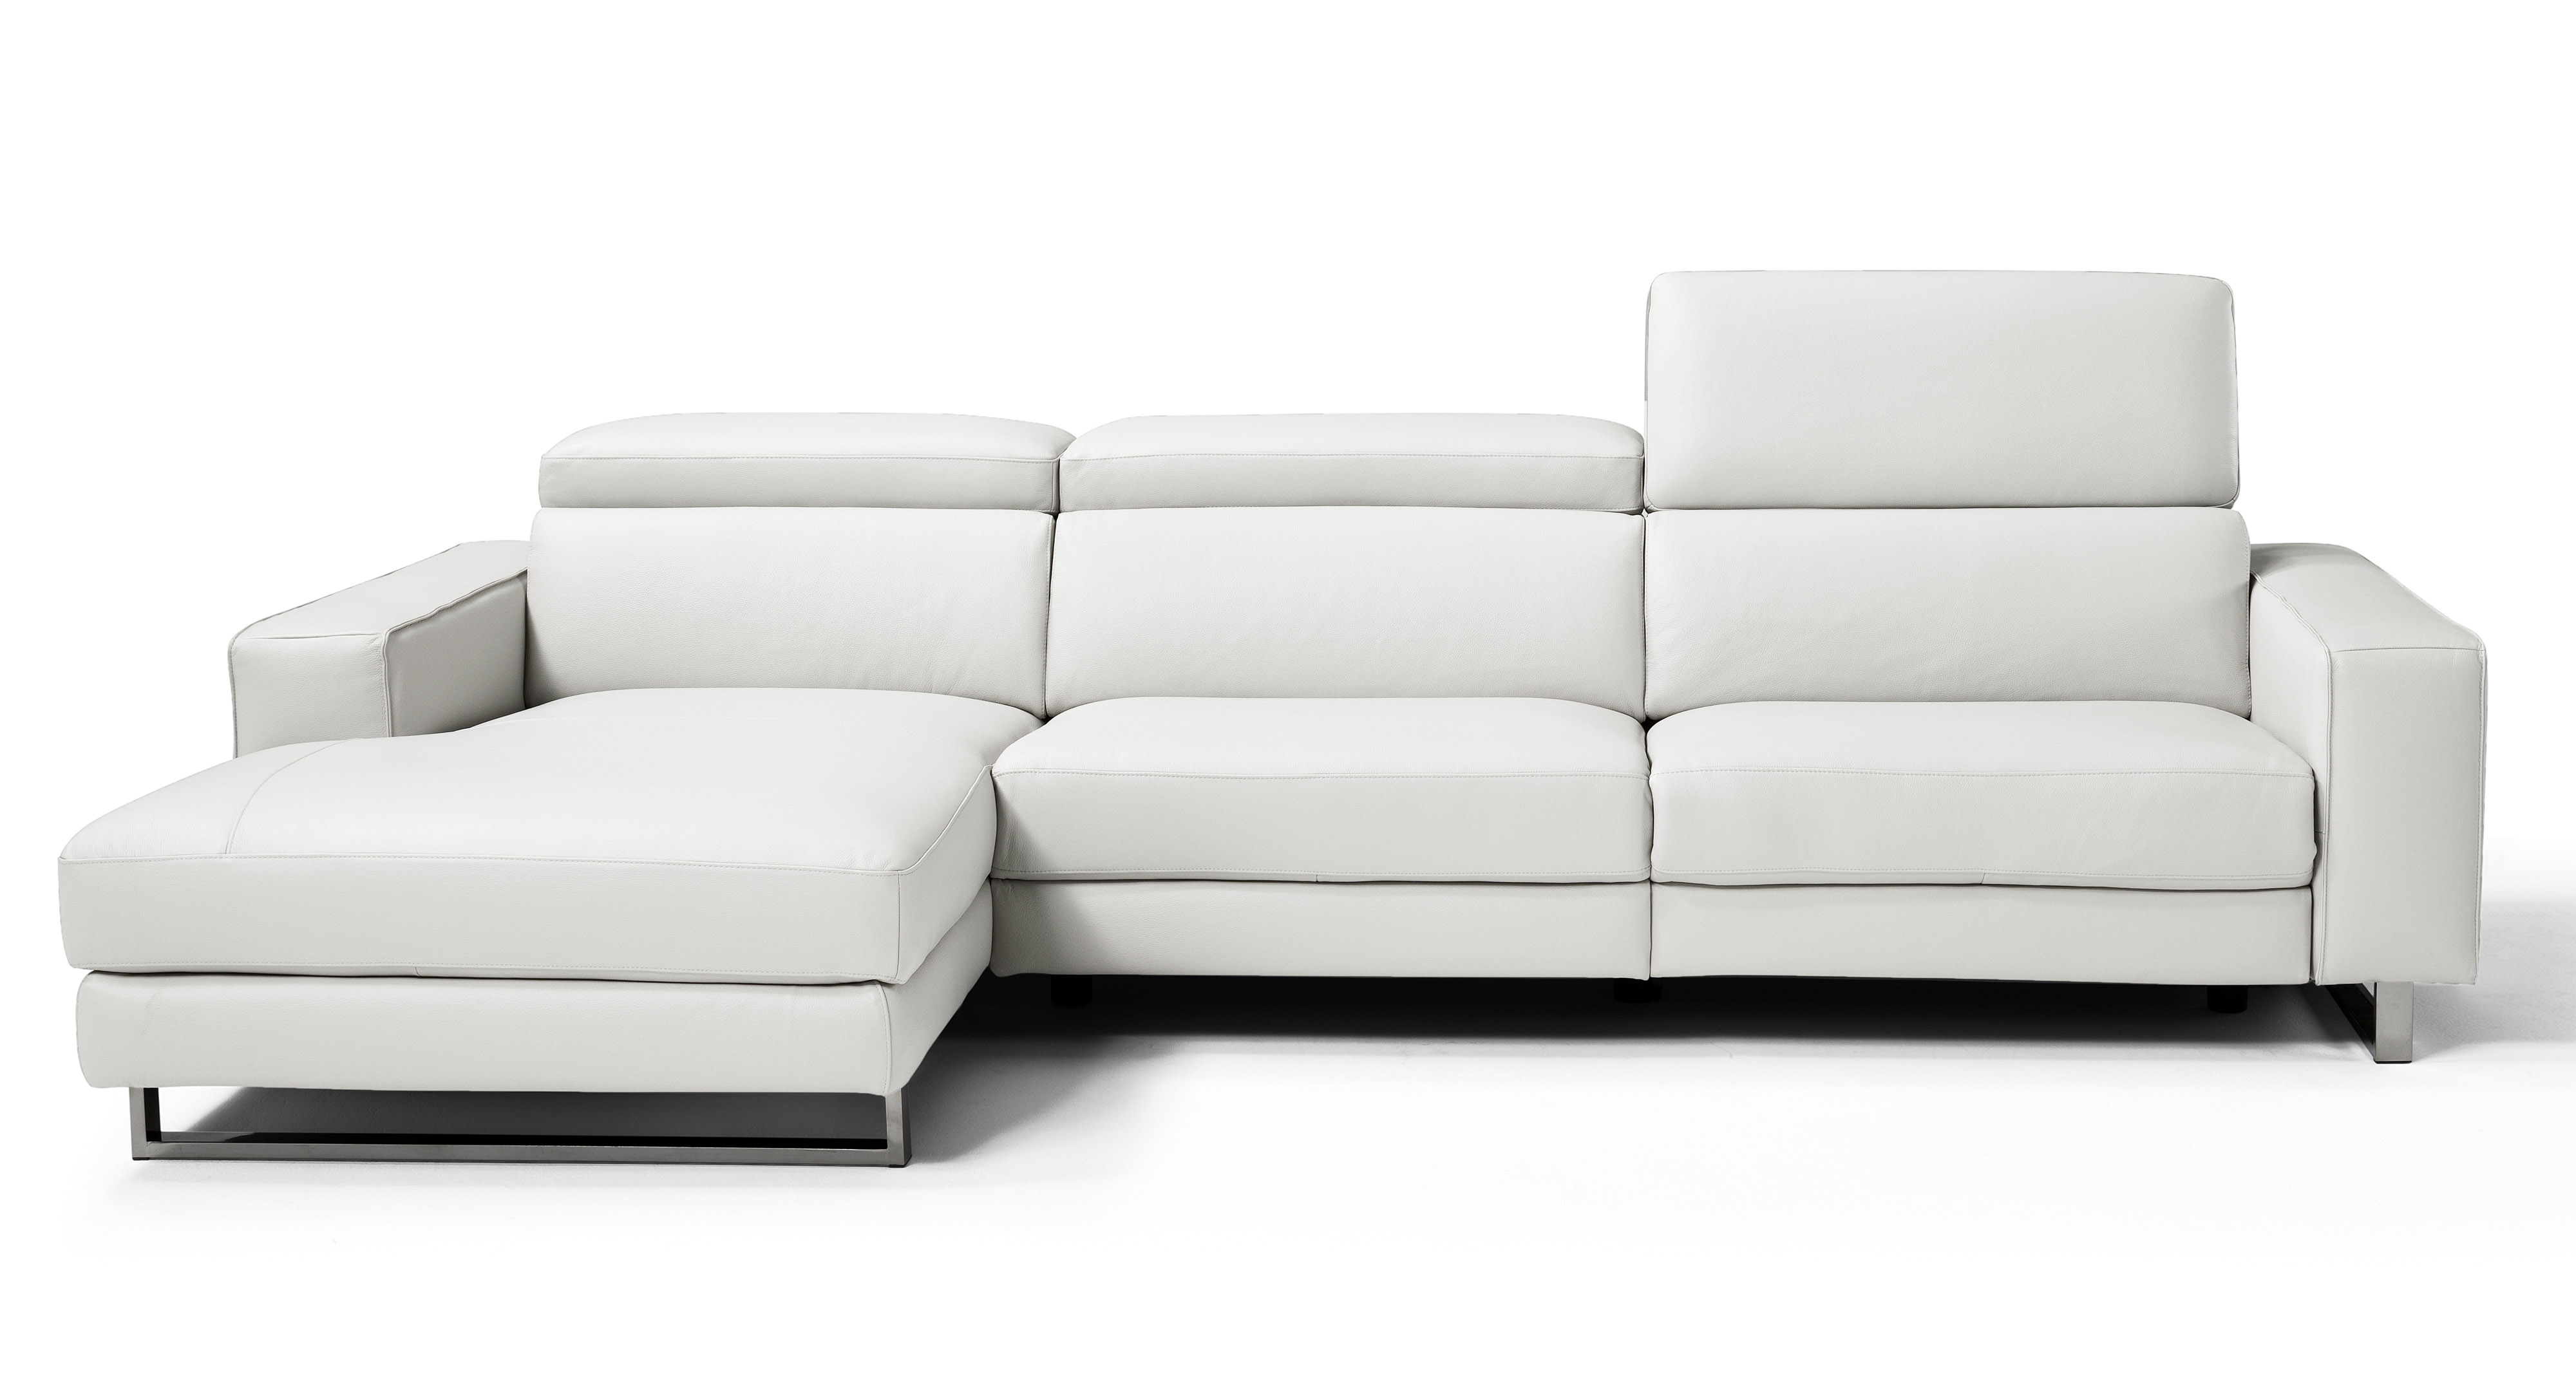 Luxurious Full Italian Leather L-shape Furniture - Click Image to Close